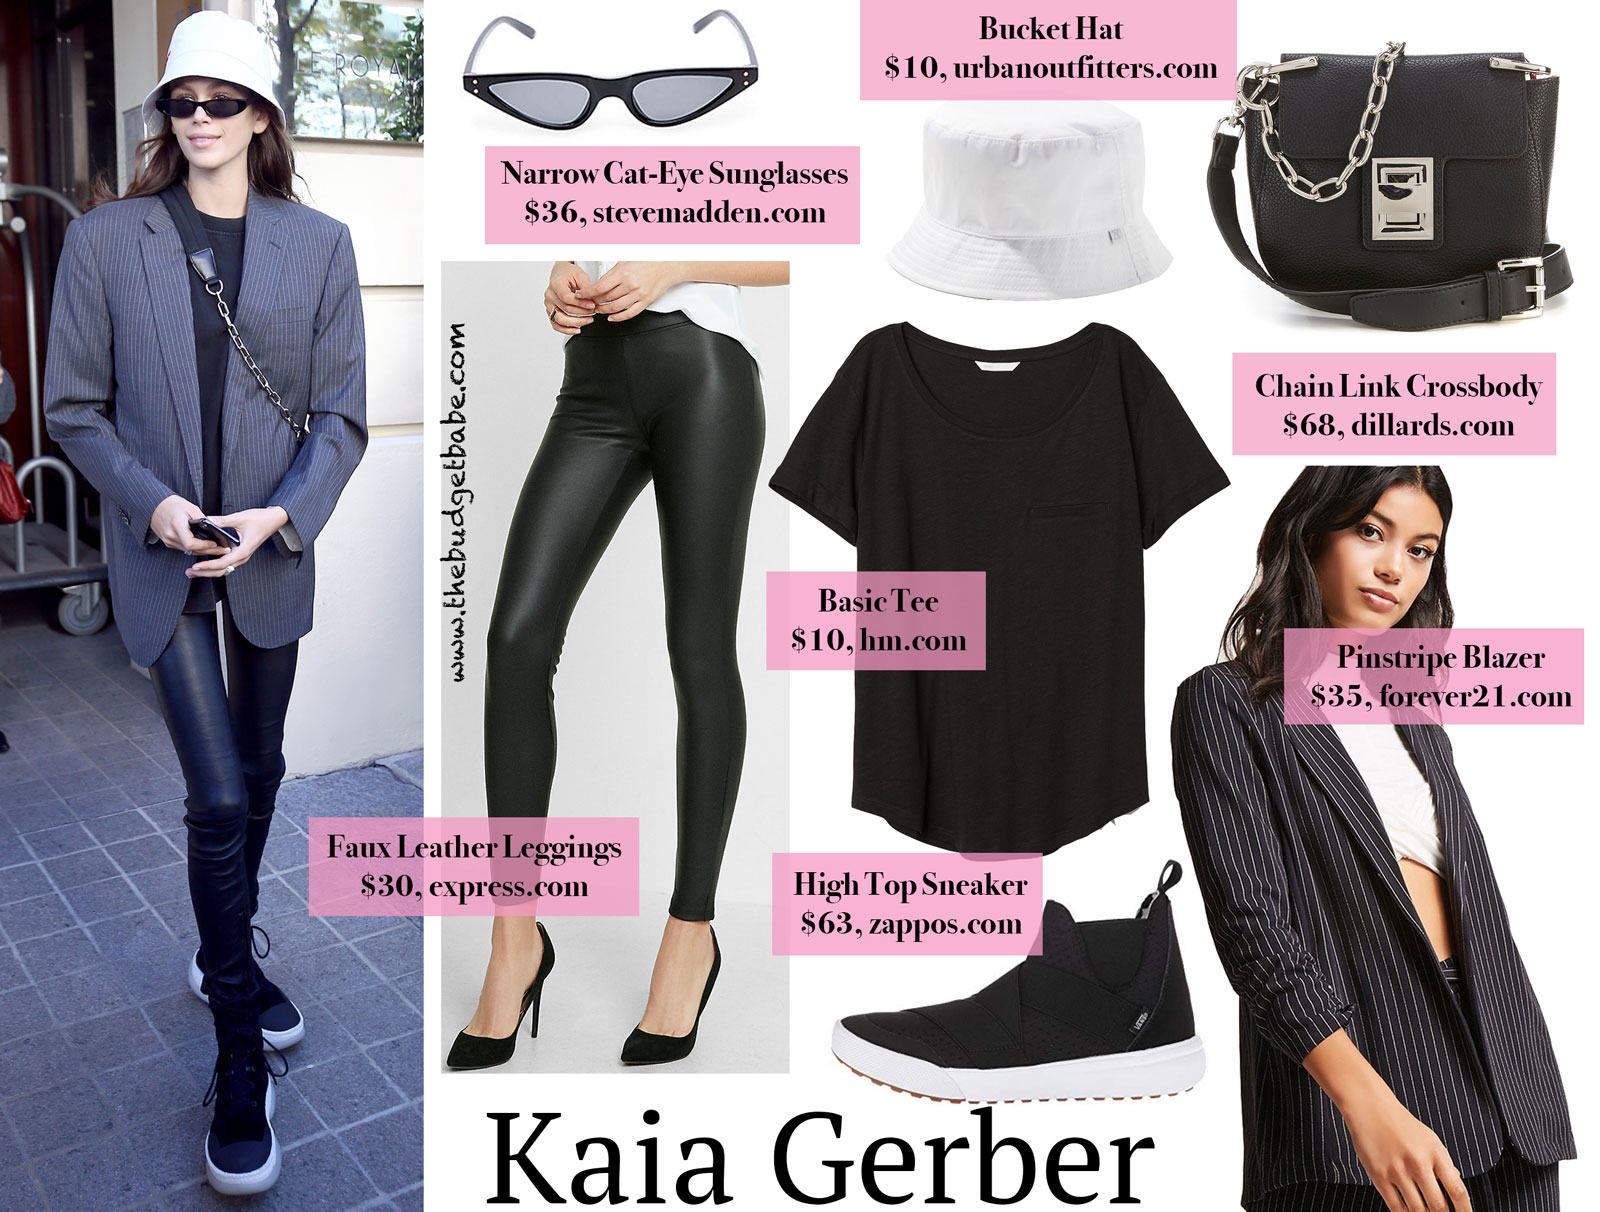 Kaia Gerber Pinstripe Blazer Look for Less